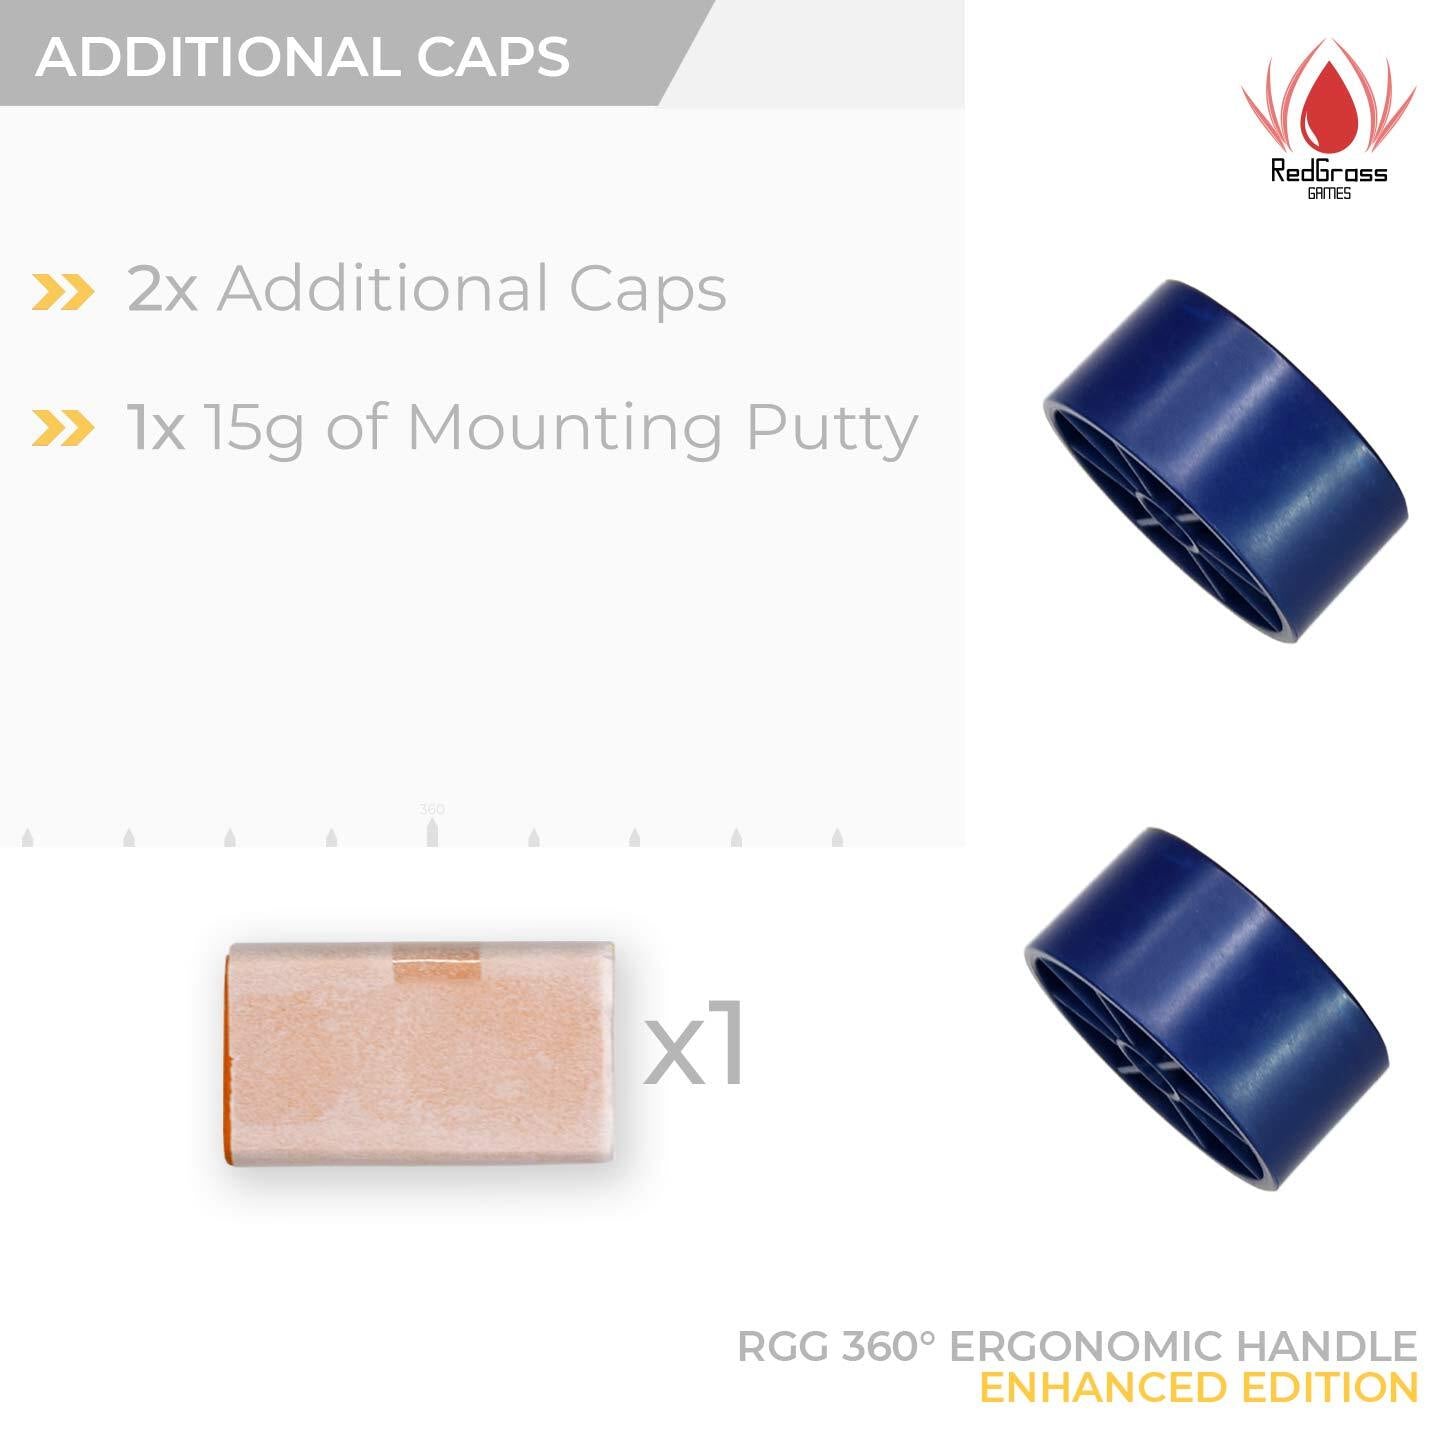 RGG360 additional caps (x2)